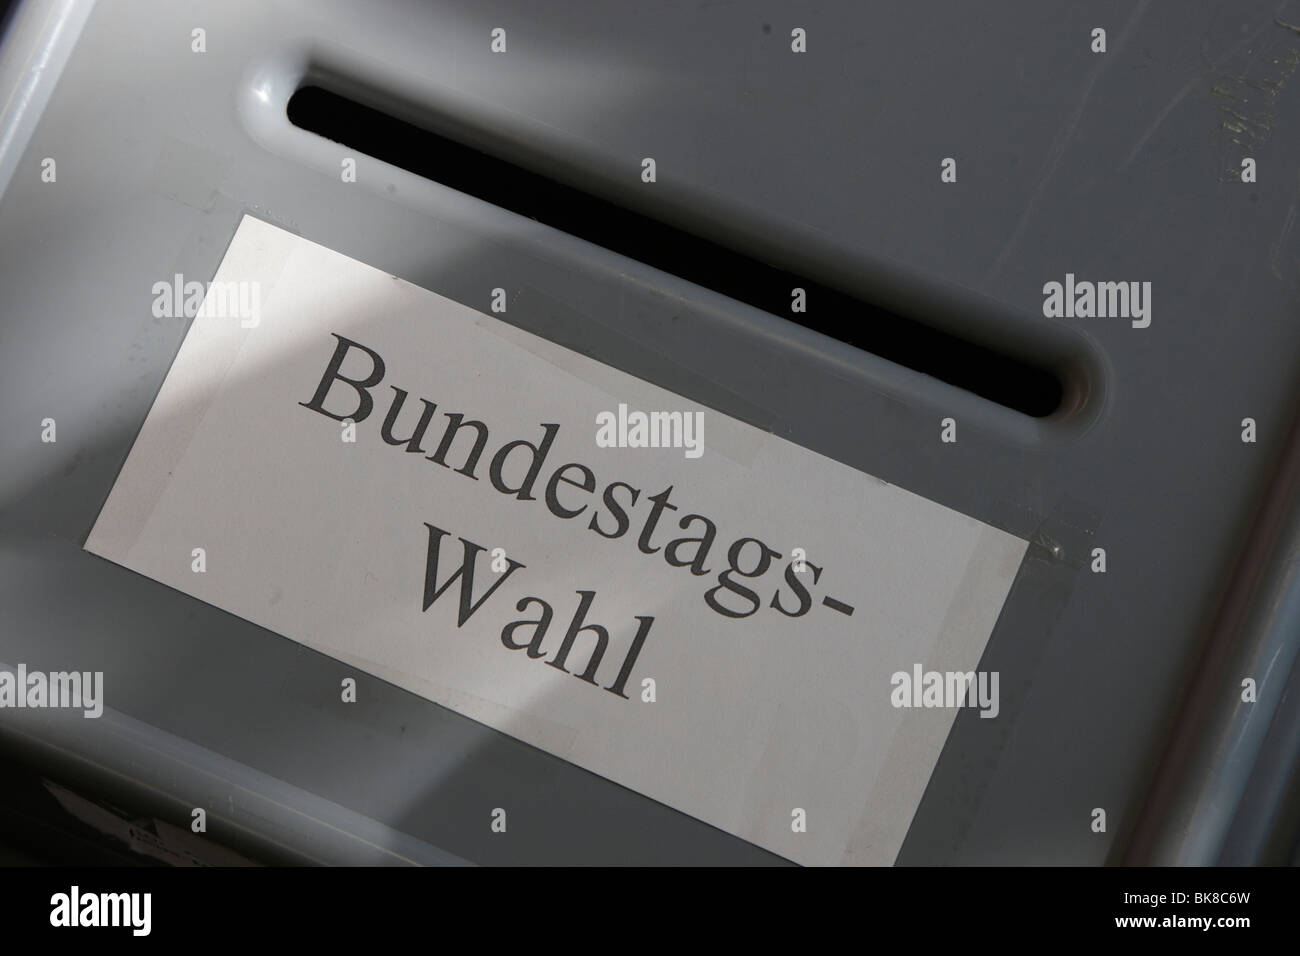 Bundestag elezioni, urna. Foto Stock